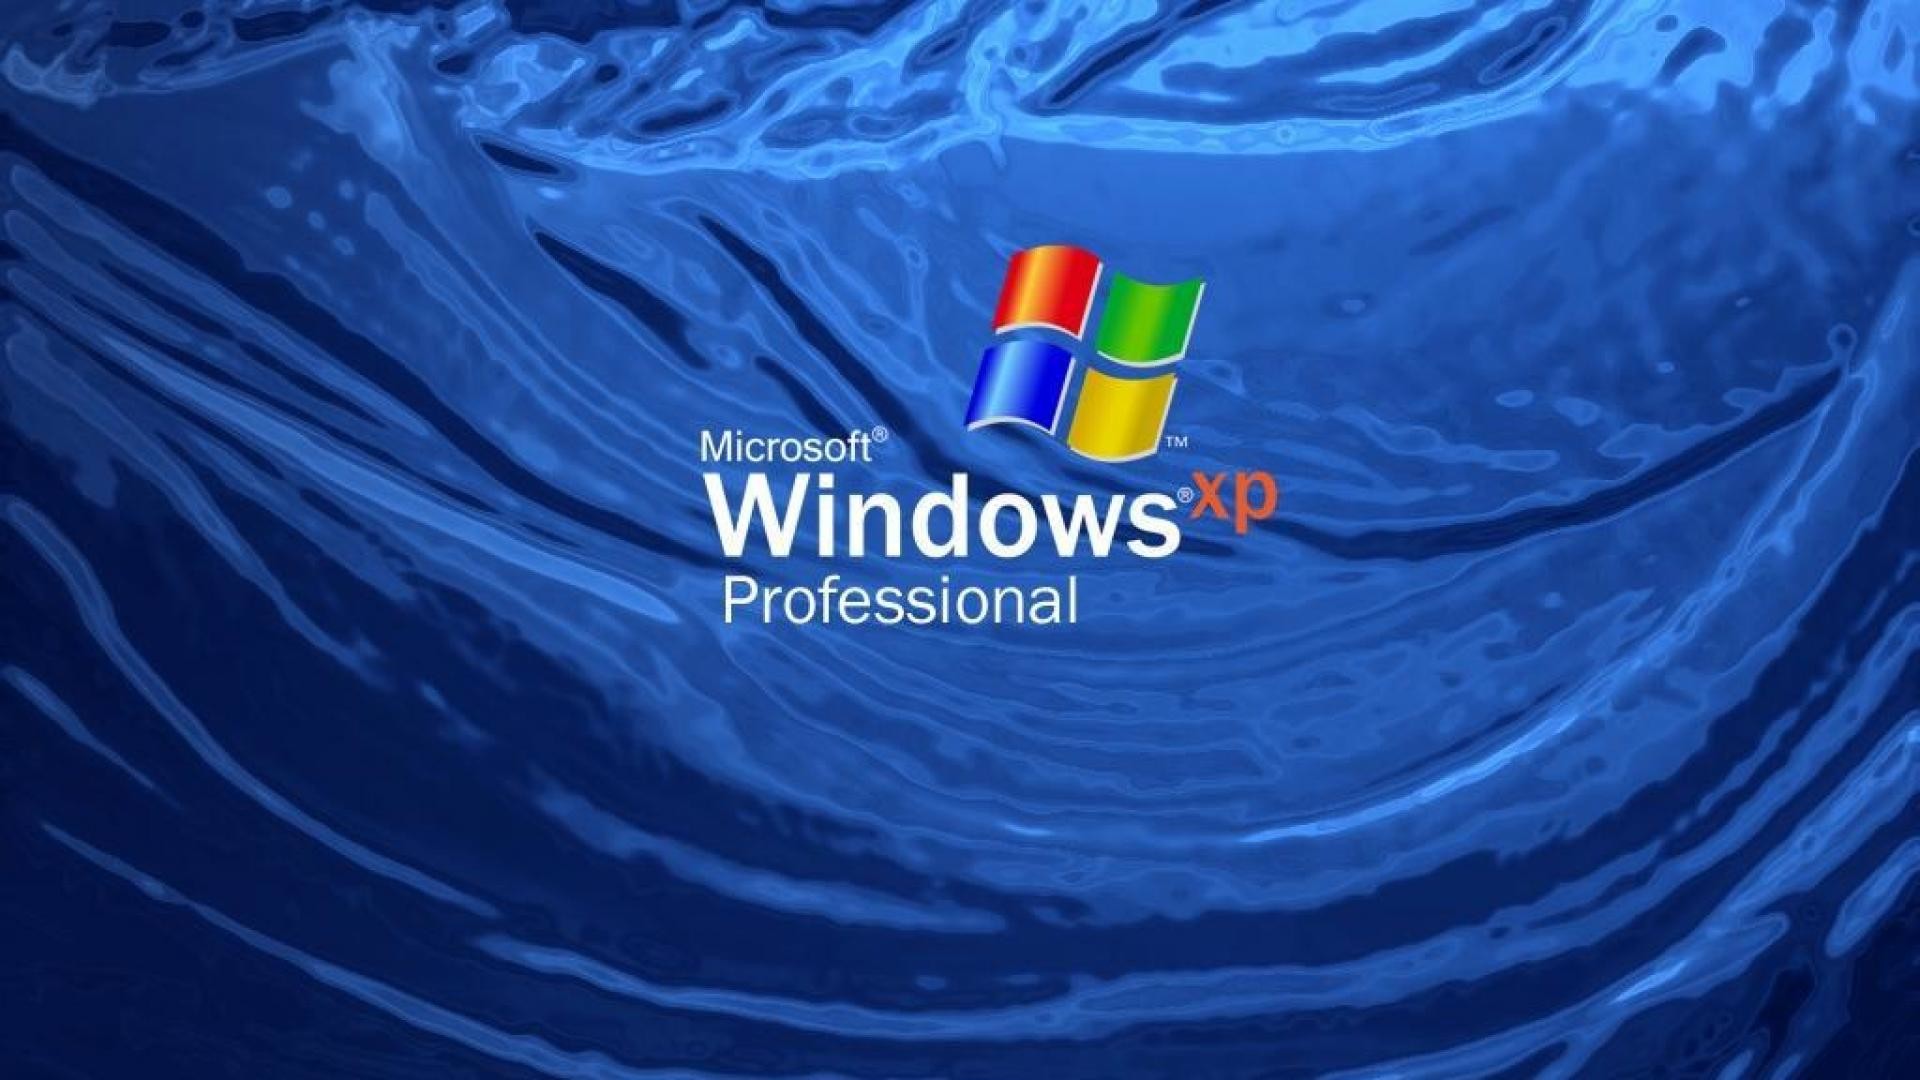 WINDOWS XP PROFESSIONAL WALLPAPER – – HD Wallpapers